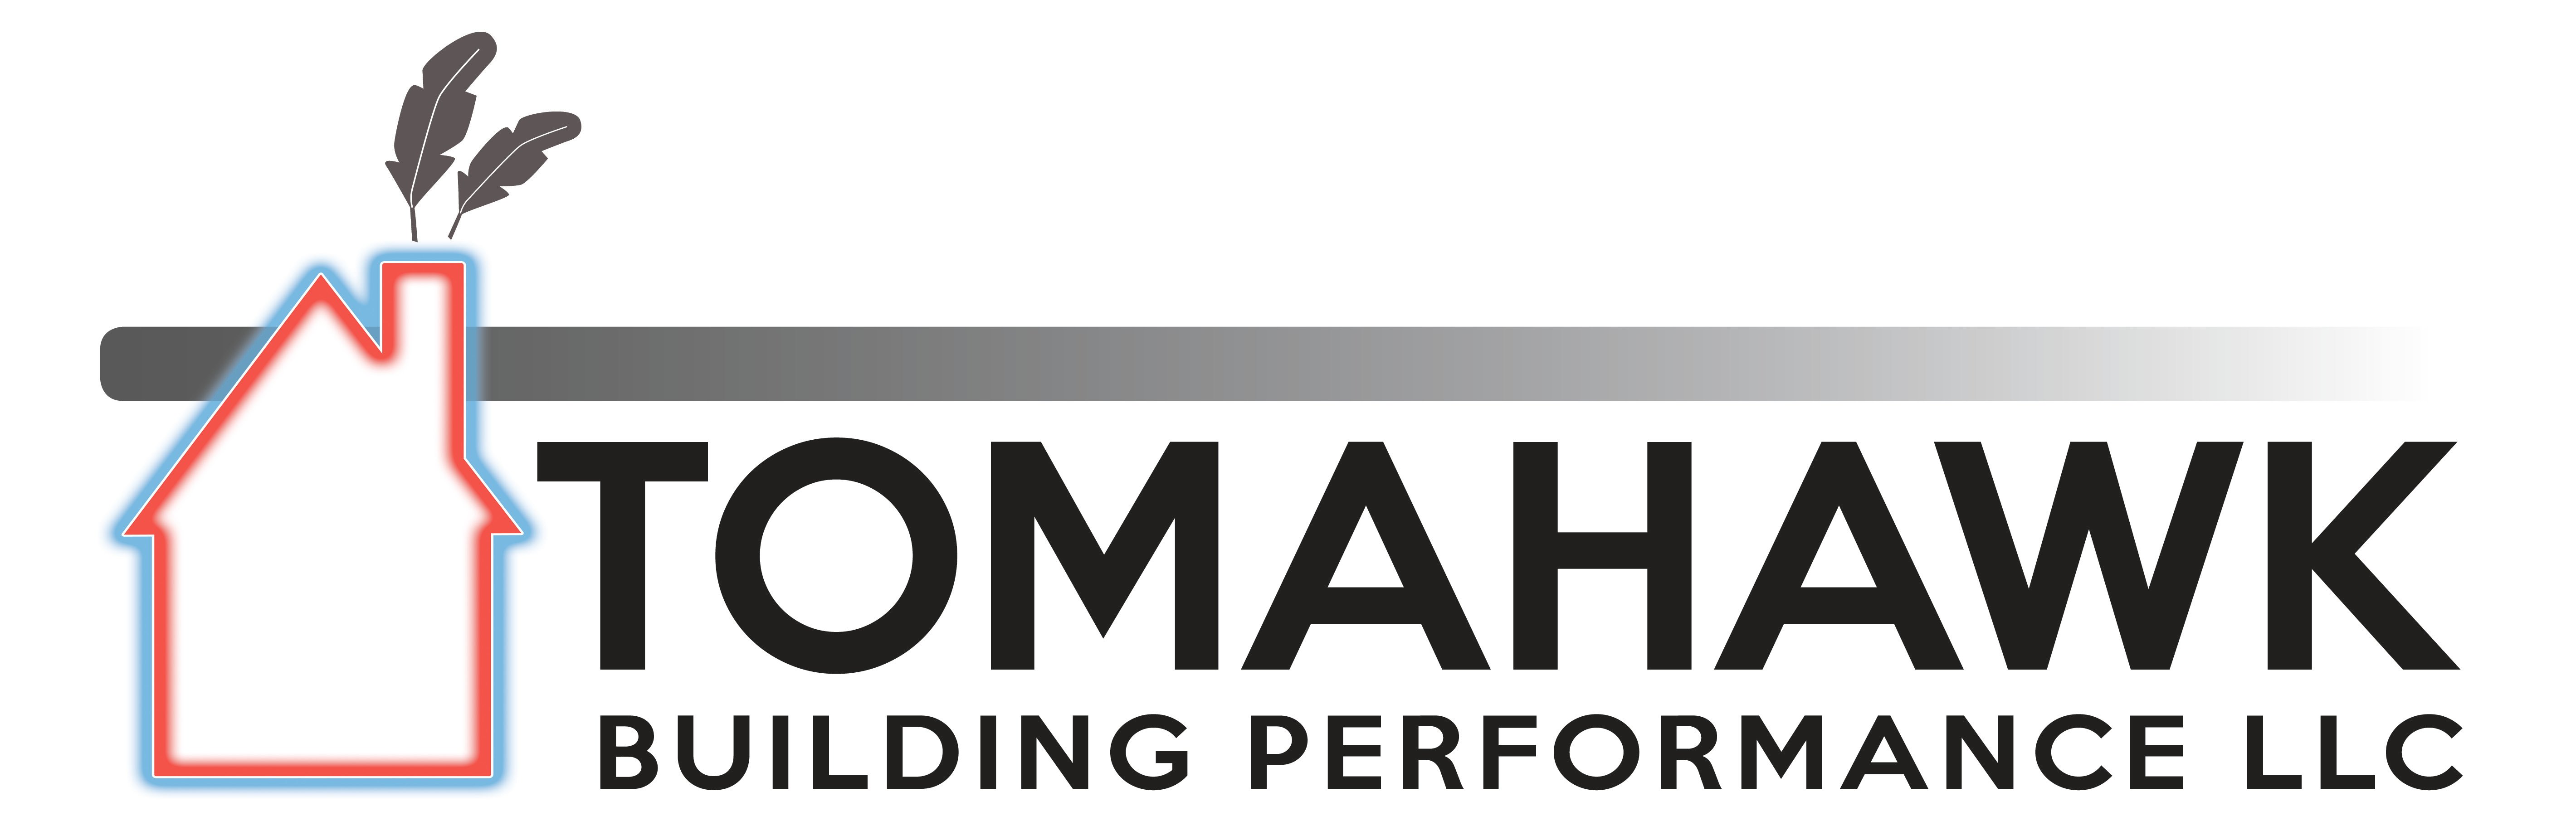 Tomahawk Building Performance, LLC Logo